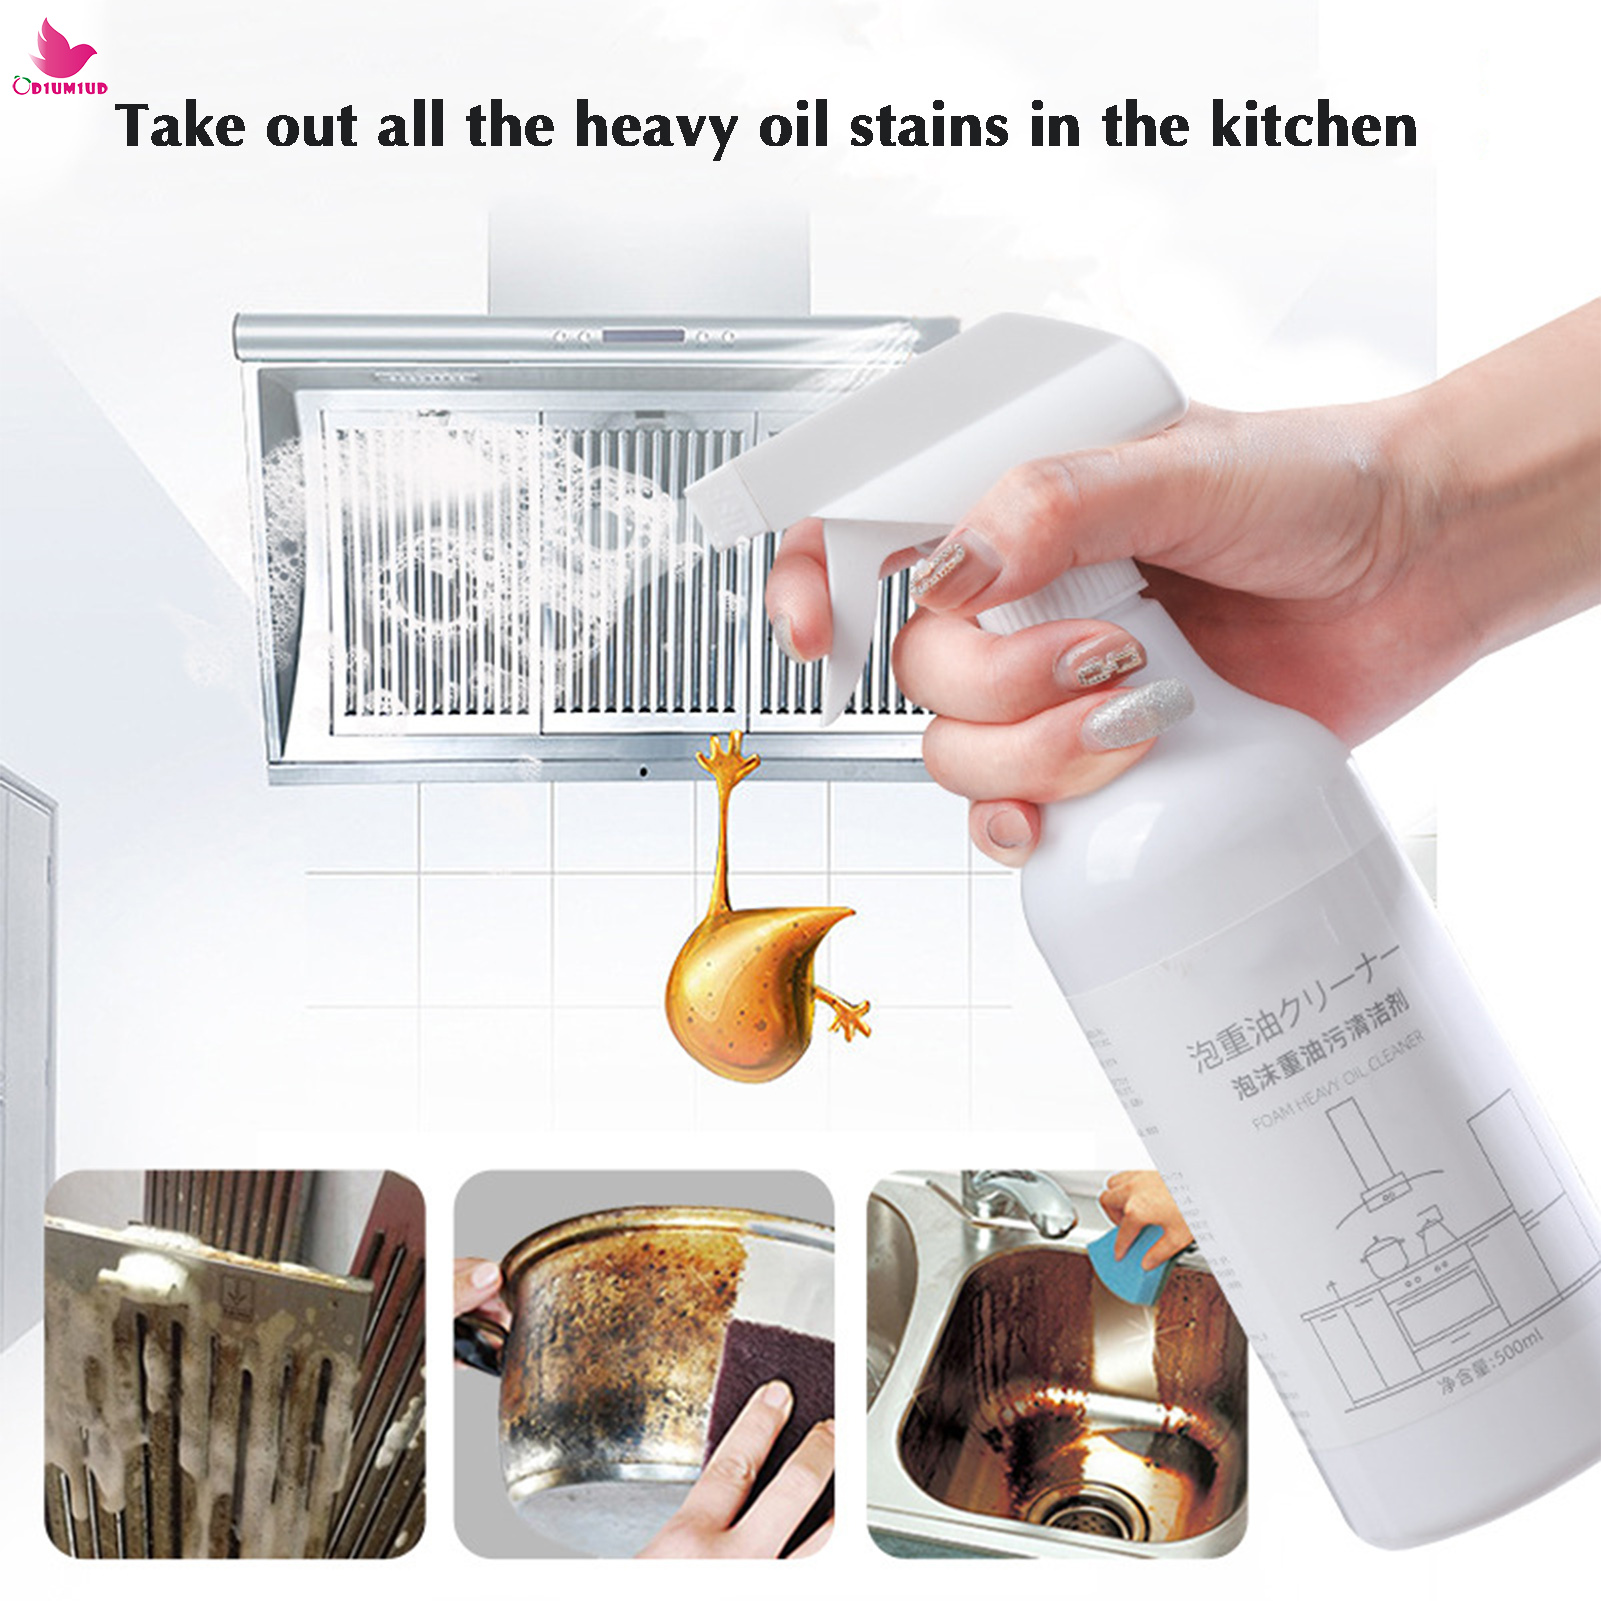 Splash Foam Spray Oven Cleaner Gentle and Effective Foam Cleaner for  Kitchen Bathroom Toilets Floors 